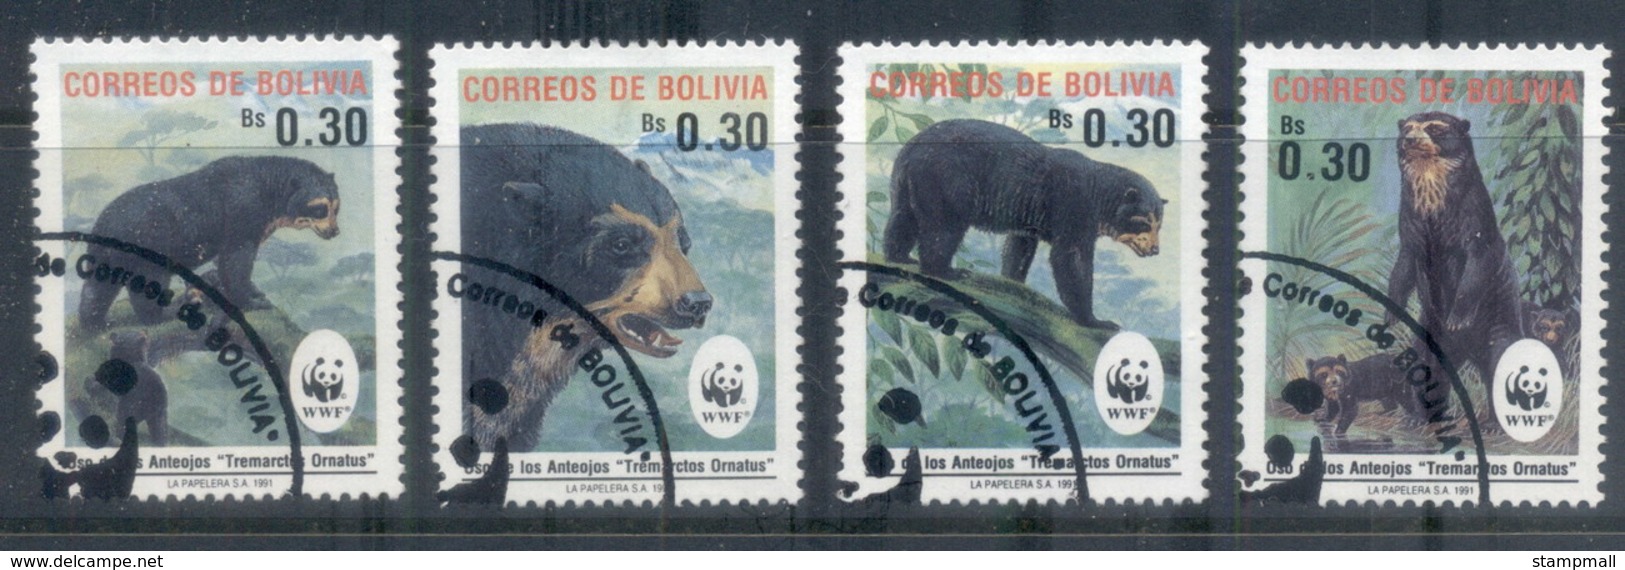 Bolivia 1991 WWF Spectacled Bear FU - Bolivia